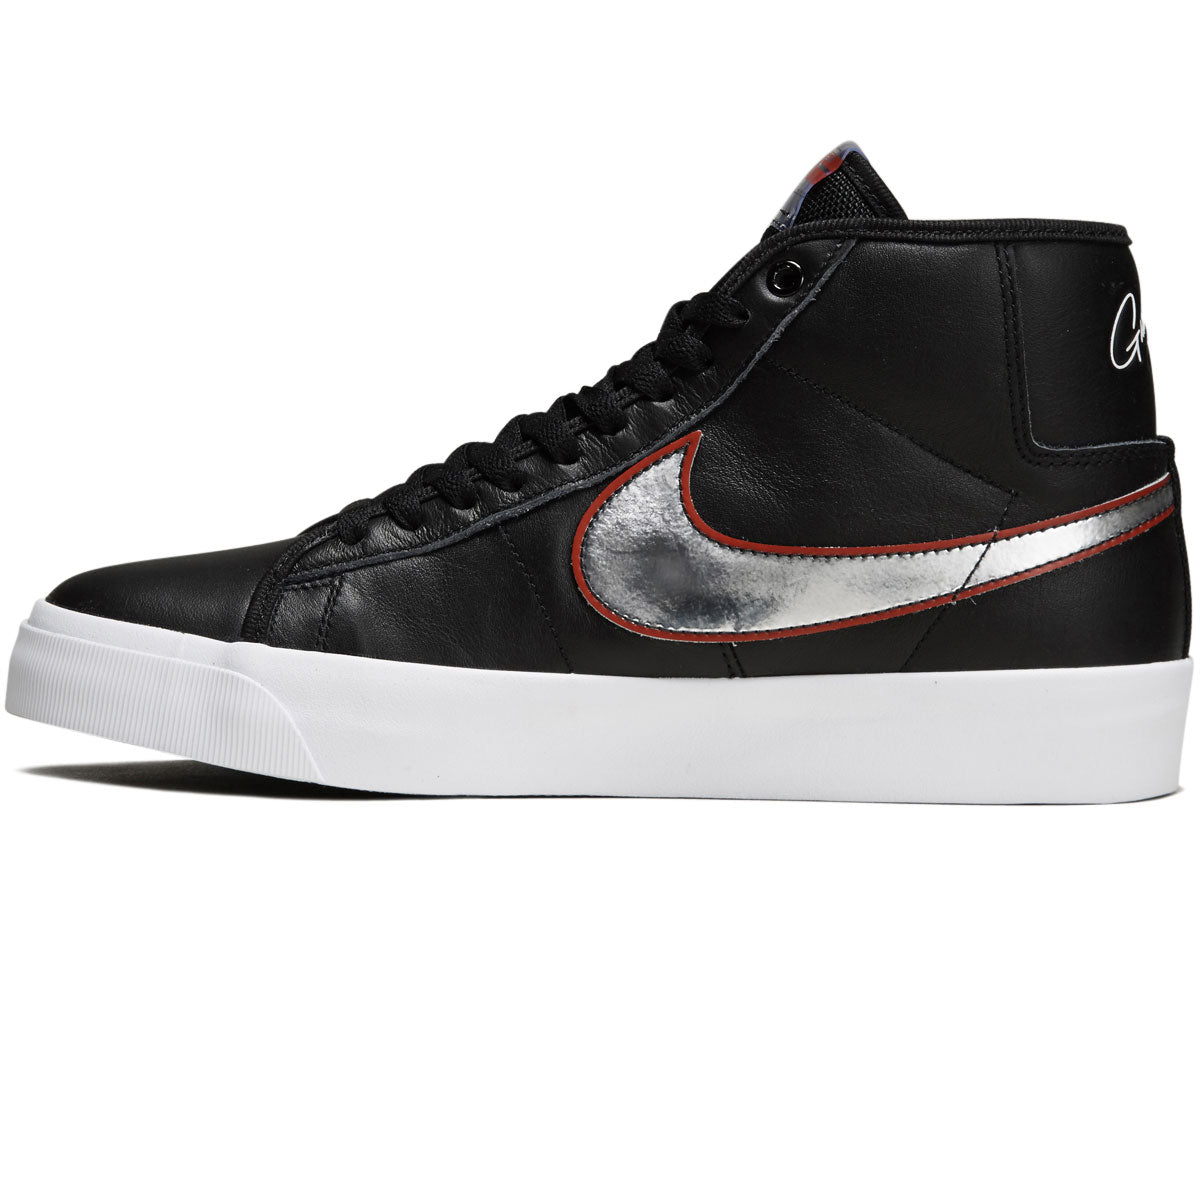 Nike SB Zoom Blazer Mid Pro GT Shoes - Black/Metallic Silver/University Red image 2